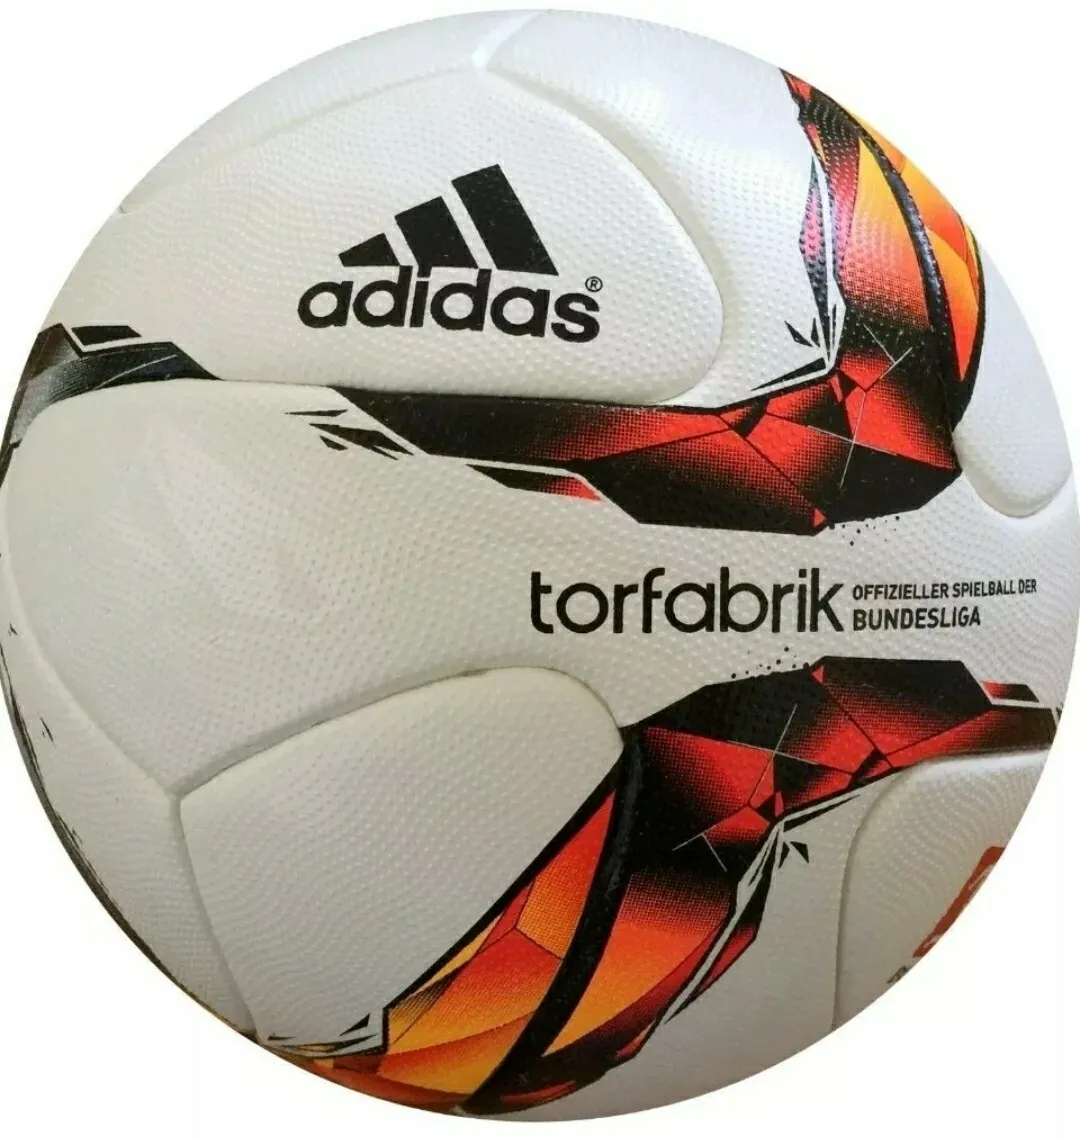 Contando insectos llenar Peaje ADIDAS Torfabrik Bundesliga 2016/17 Winter OMB- Fifa Approved ball size 5 |  eBay